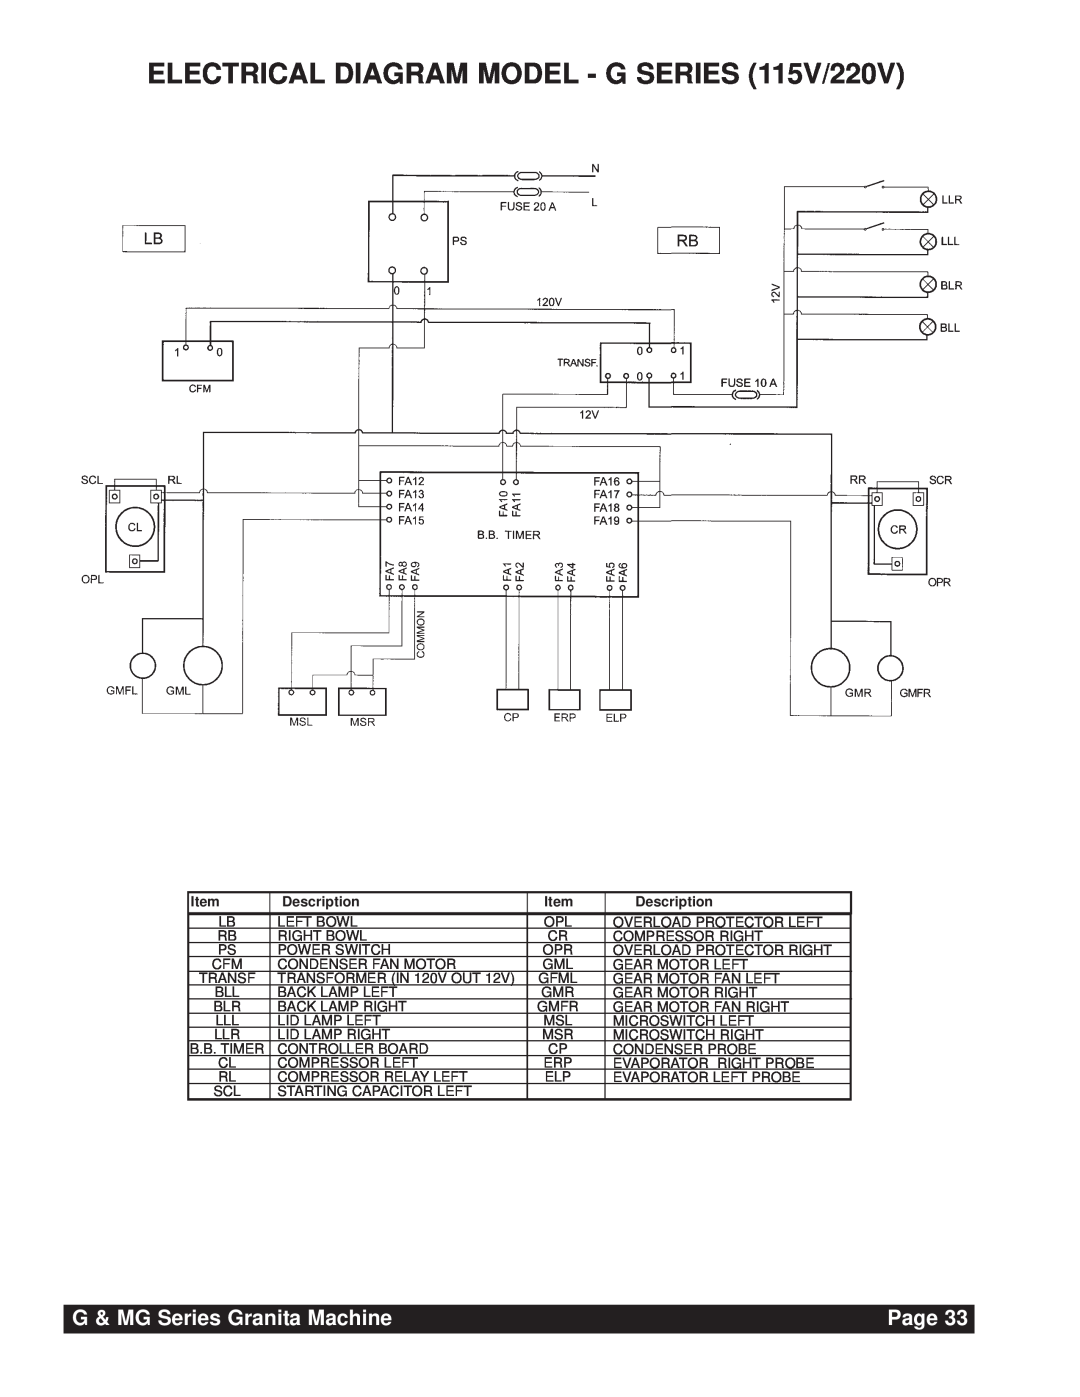 Grindmaster ELECTRICAL DIAGRAM MODEL - G SERIES 115V/220V, G & MG Series Granita Machine, Page, Description 